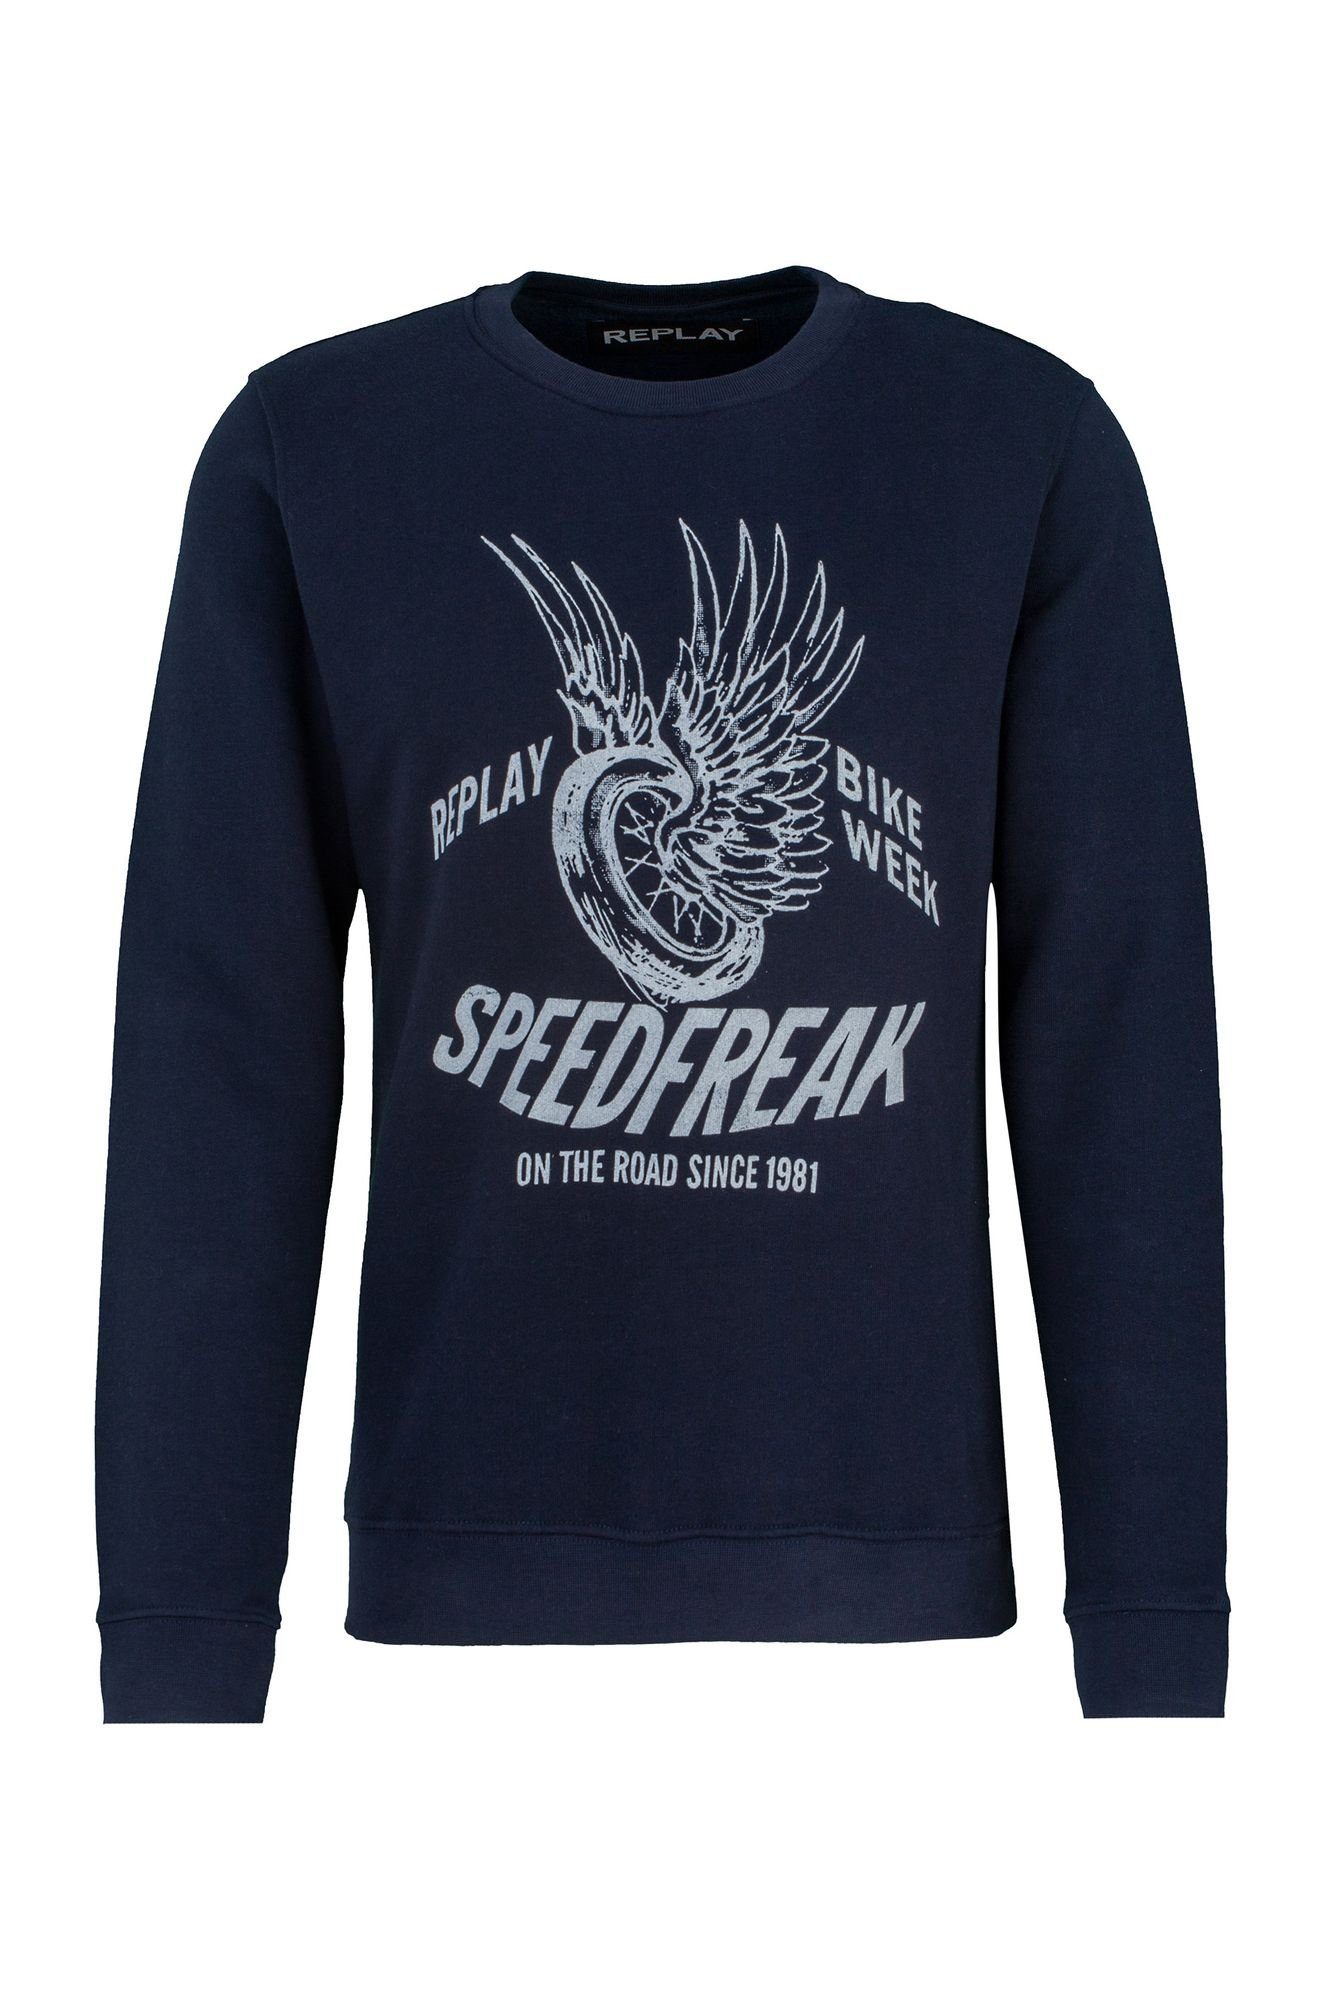 Replay Sweatshirt Speedfreak aus reiner Baumwolle